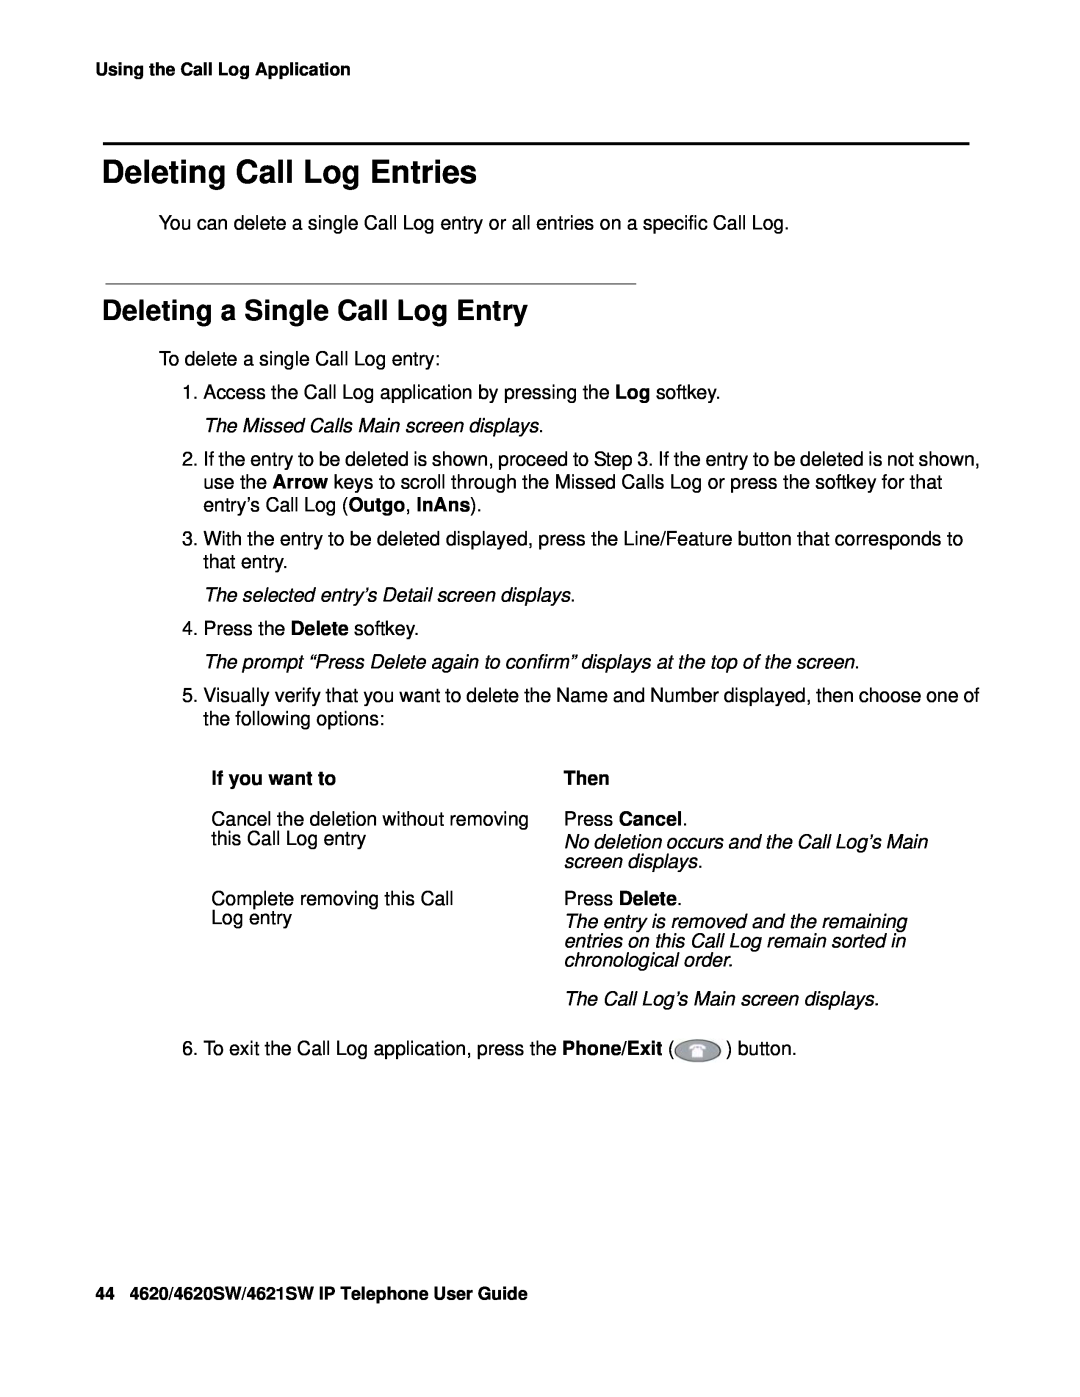 Avaya 4621SW, 4620SW manual Deleting Call Log Entries, Deleting a Single Call Log Entry 